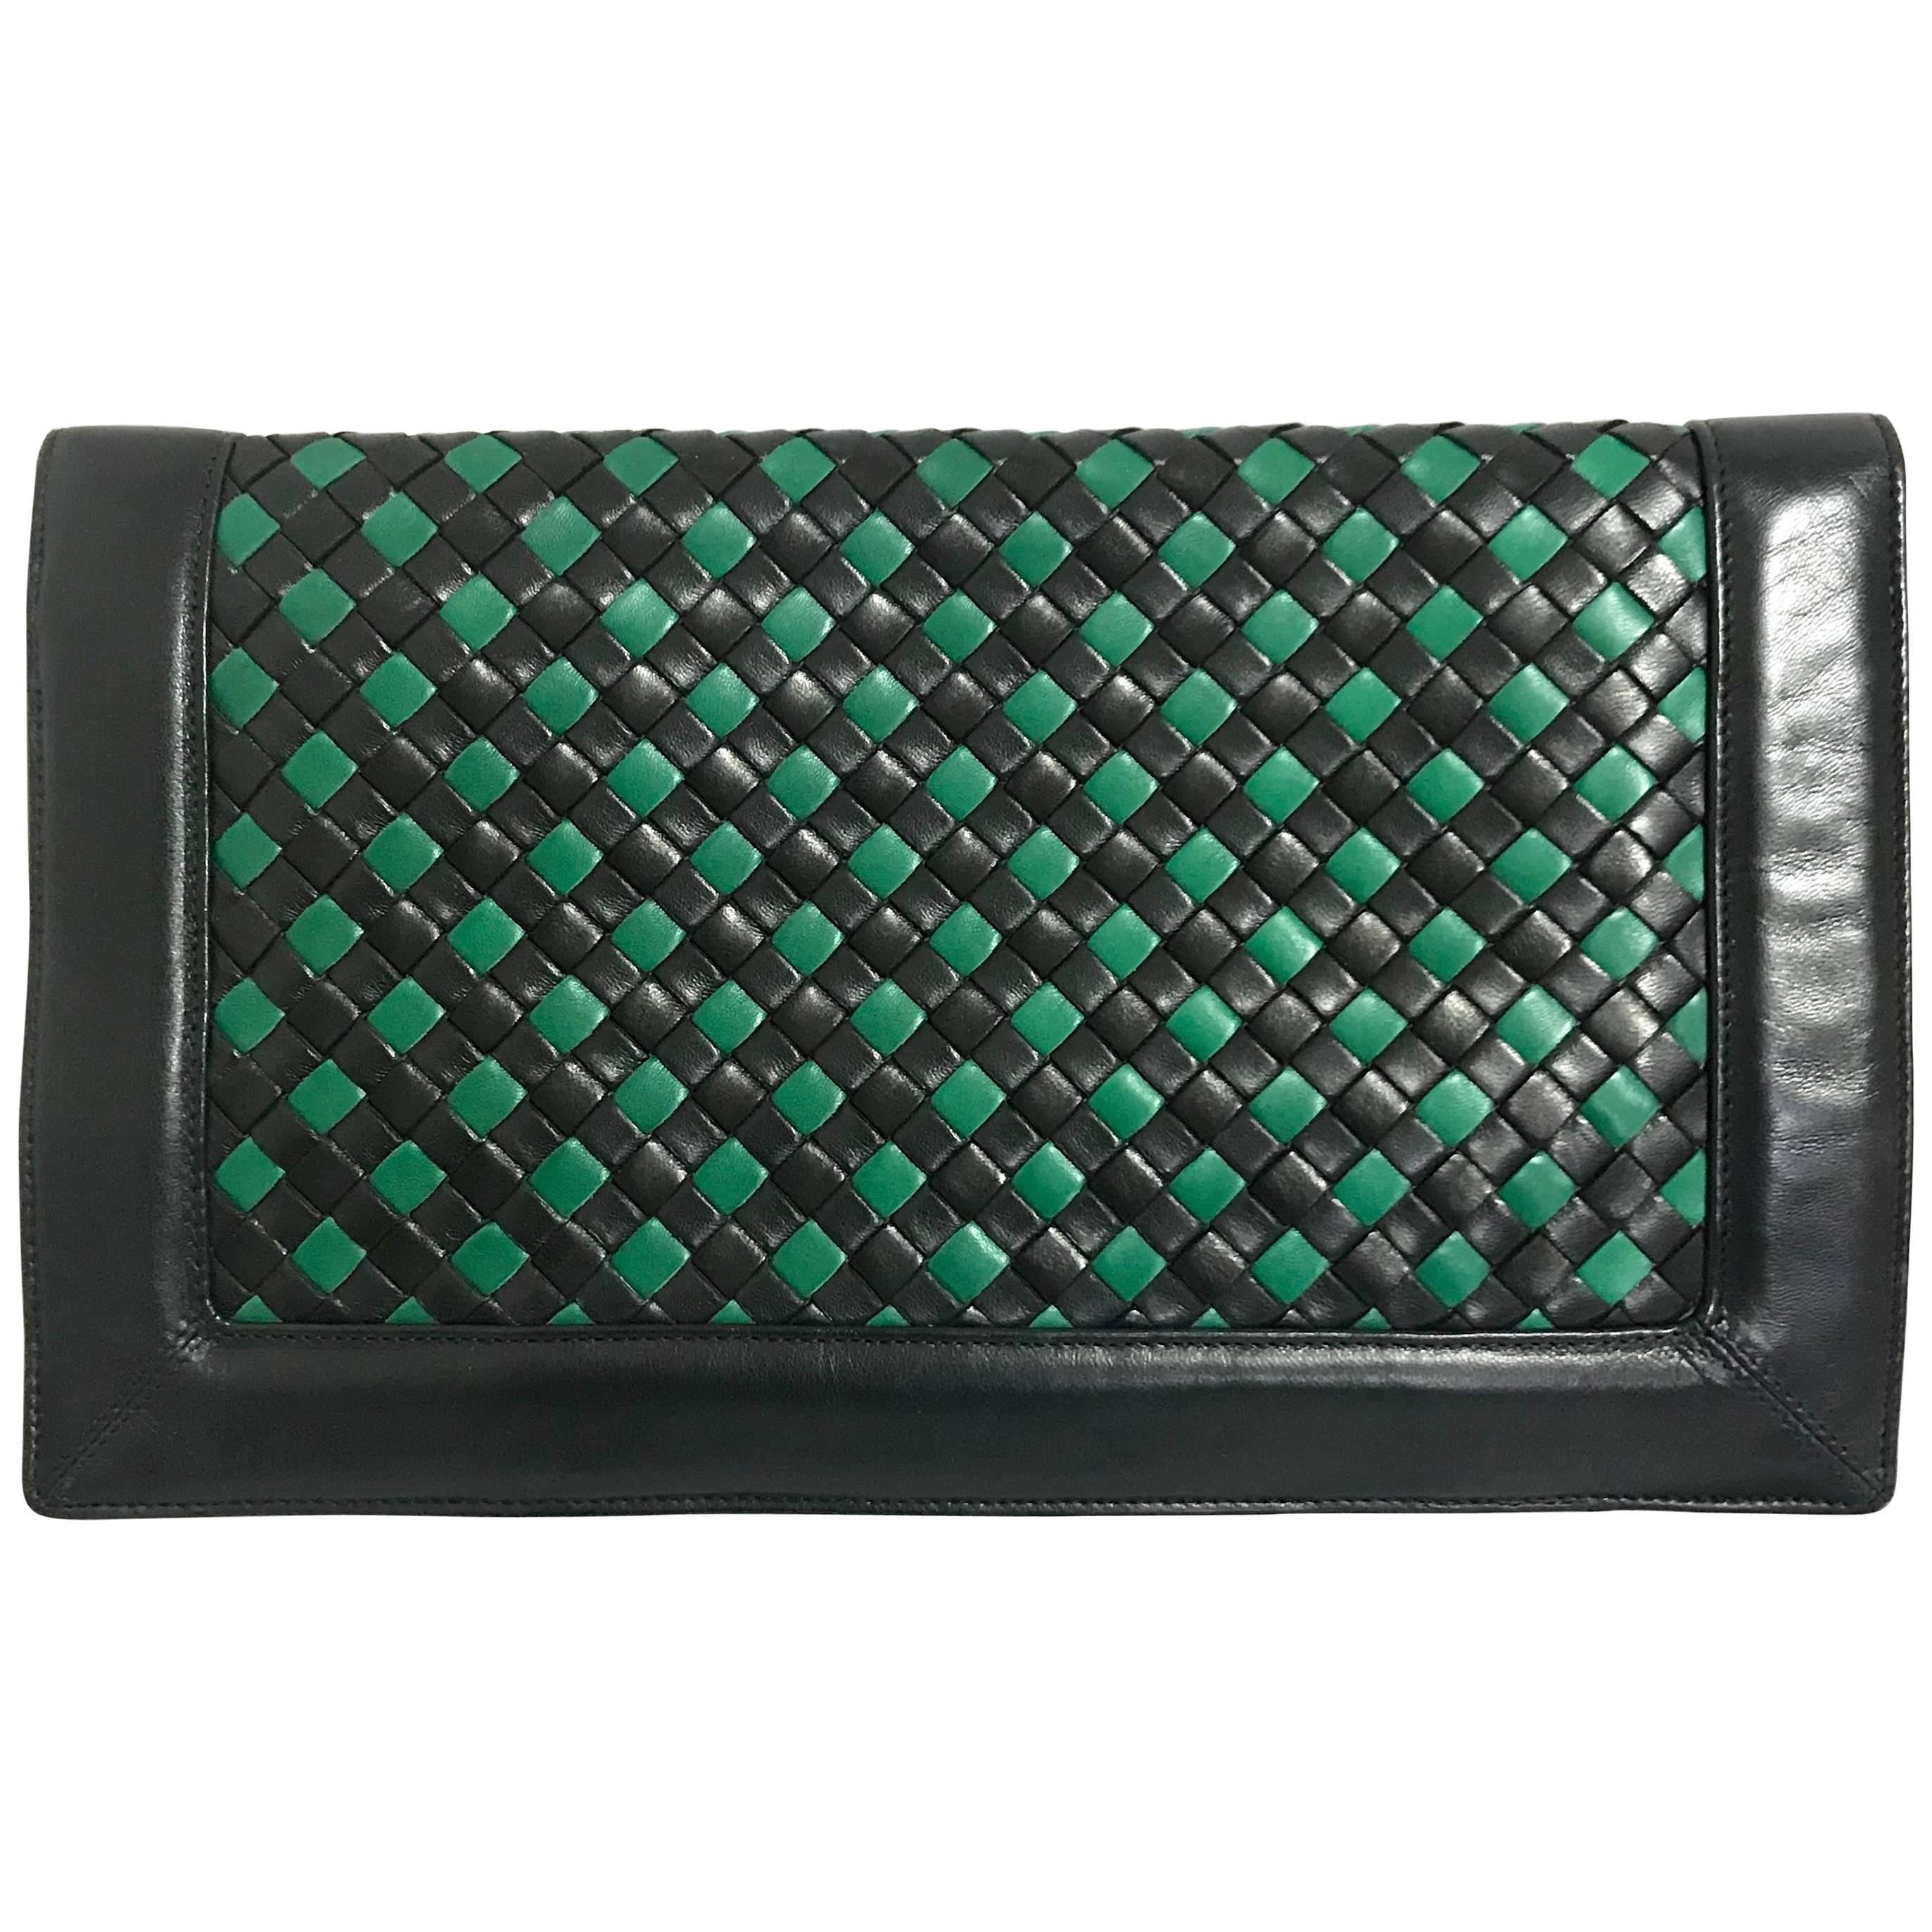 Vintage Bottega Veneta intrecciato navy and green large clutch bag, unisex purse For Sale